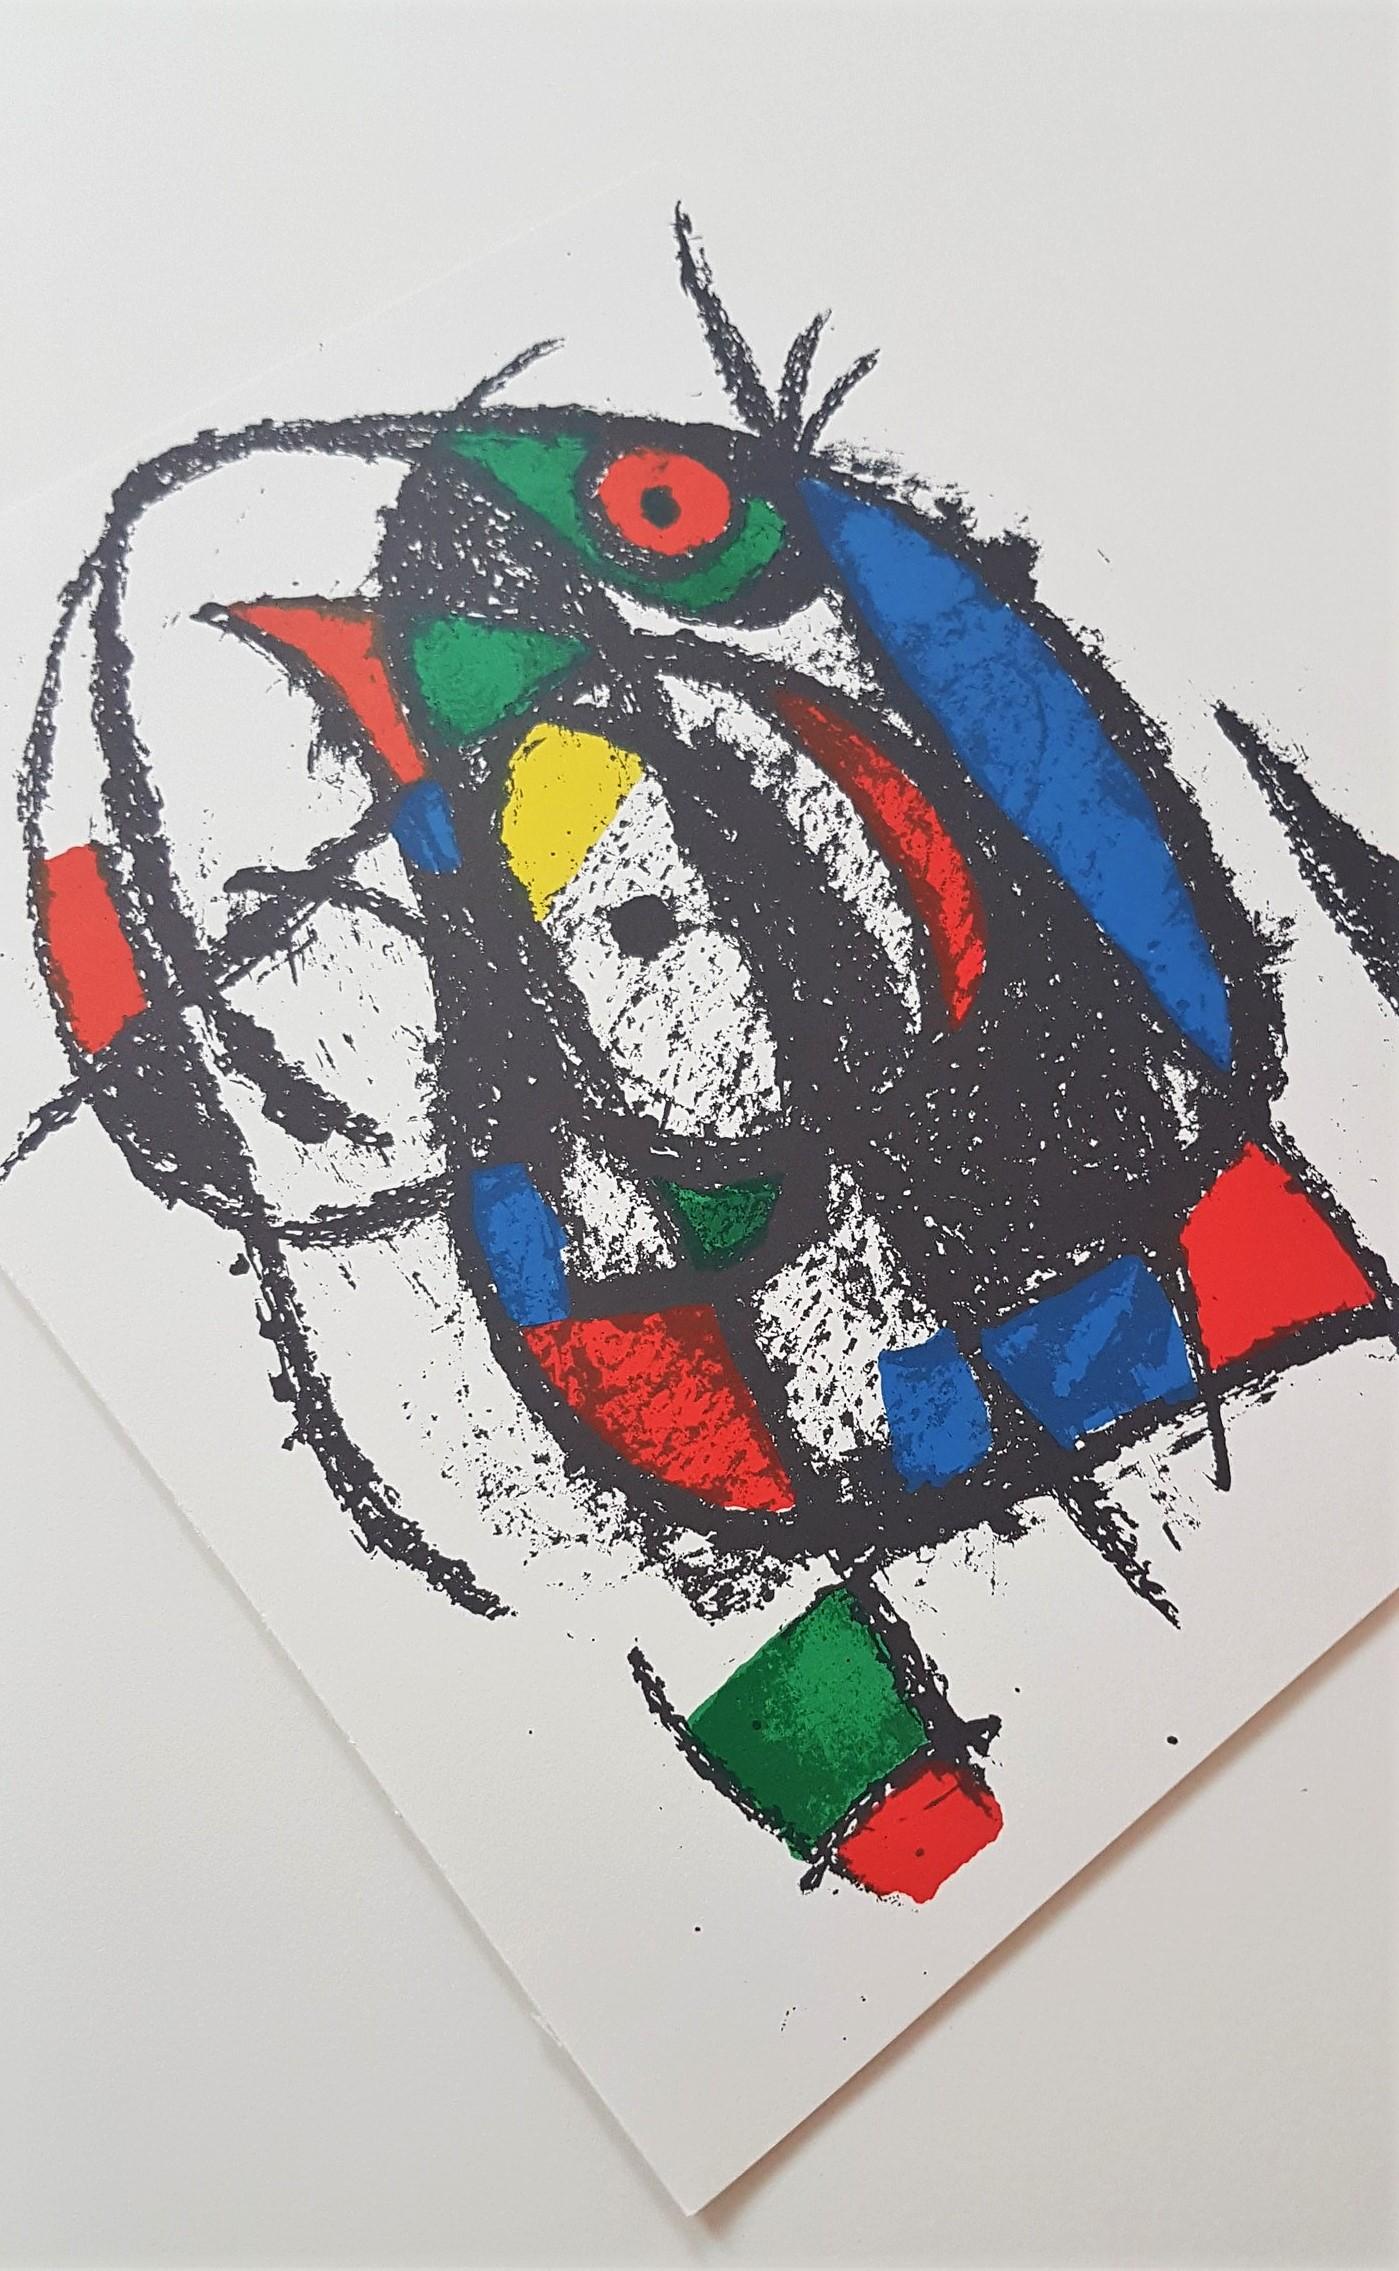 Joan Miró
Originallithographie IV
Farblithographie
Jahr: 1977
Größe: 12,5 × 9,6 Zoll
Katalog Raisonné: Teixidor, Miro Lithographe III, 1964-1969, S.29
Verlag: Maeght Editeur, Paris, Frankreich 
Unsigniert, Unbekannte Auflagenhöhe
COA